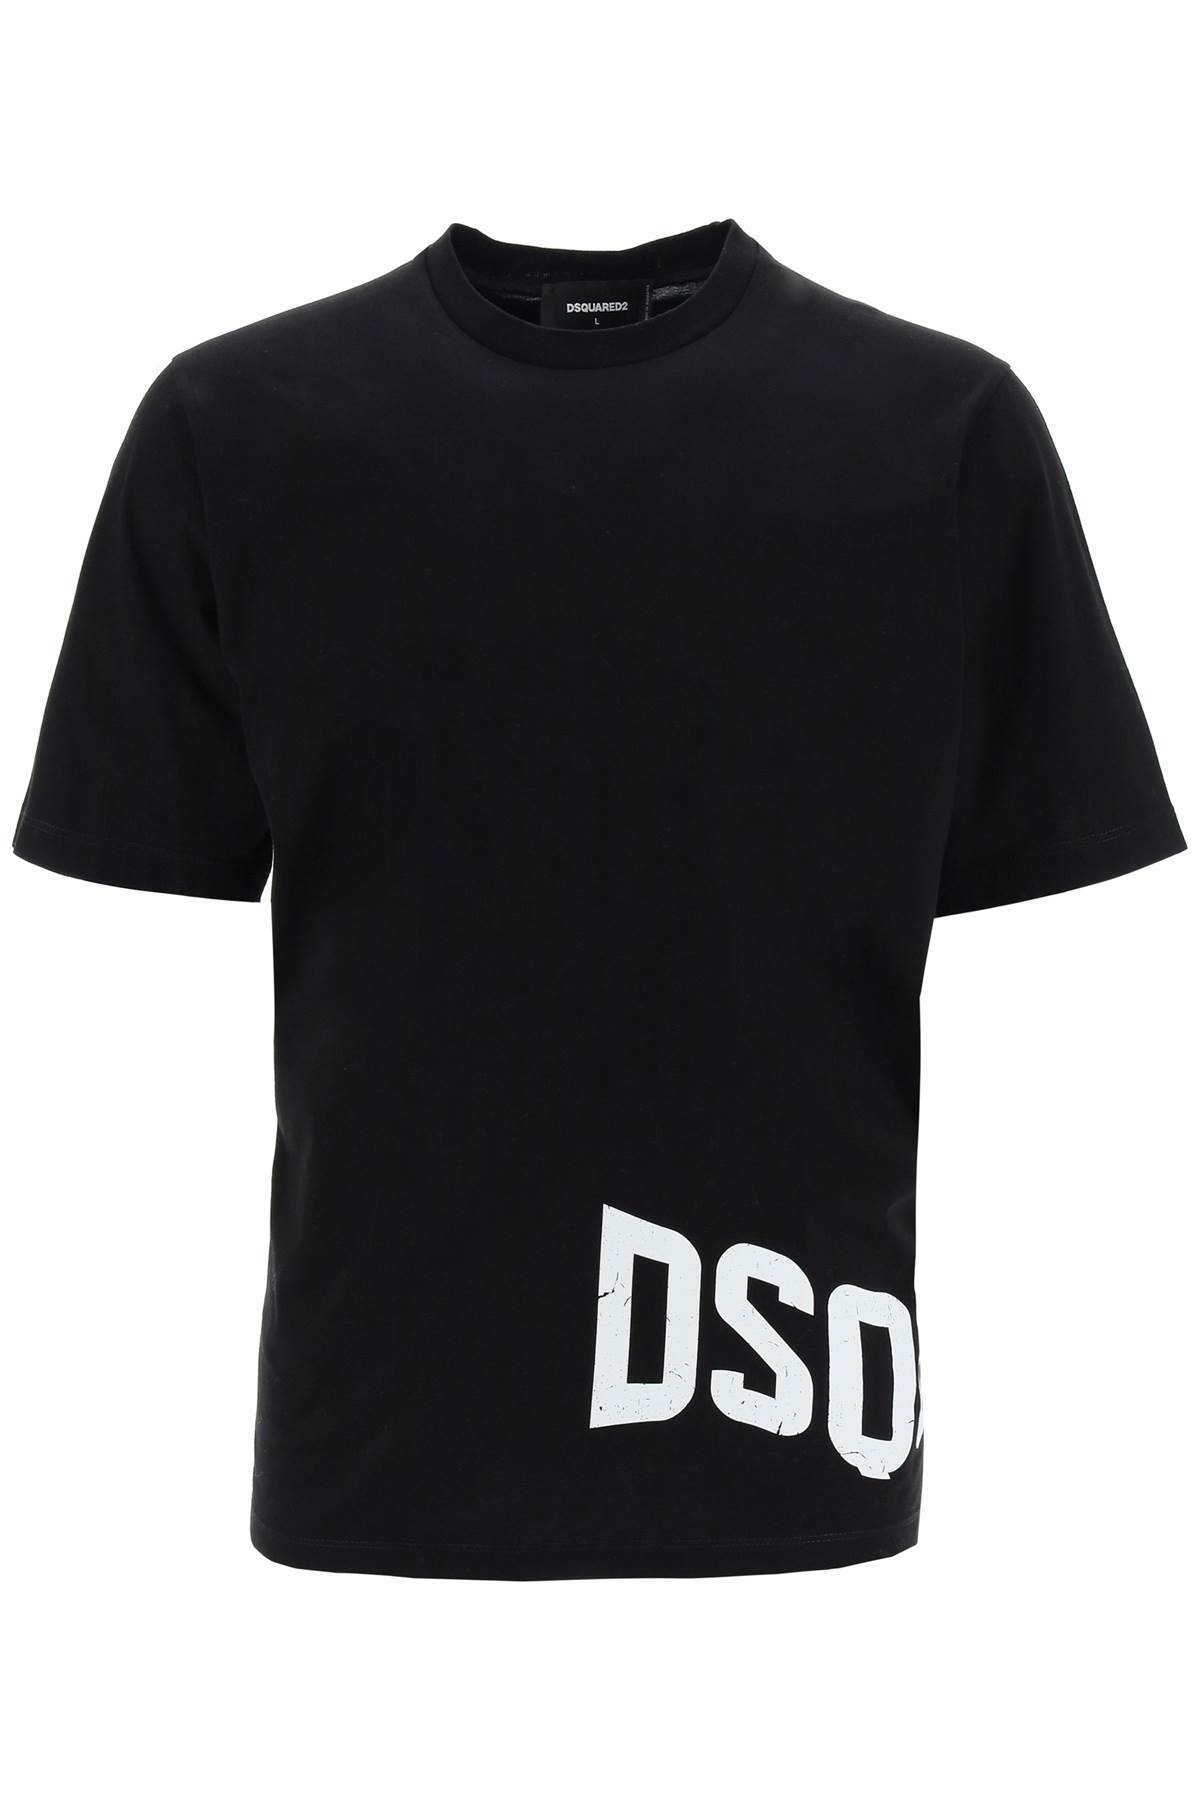 Dsquared2 Side Logo T-shirt